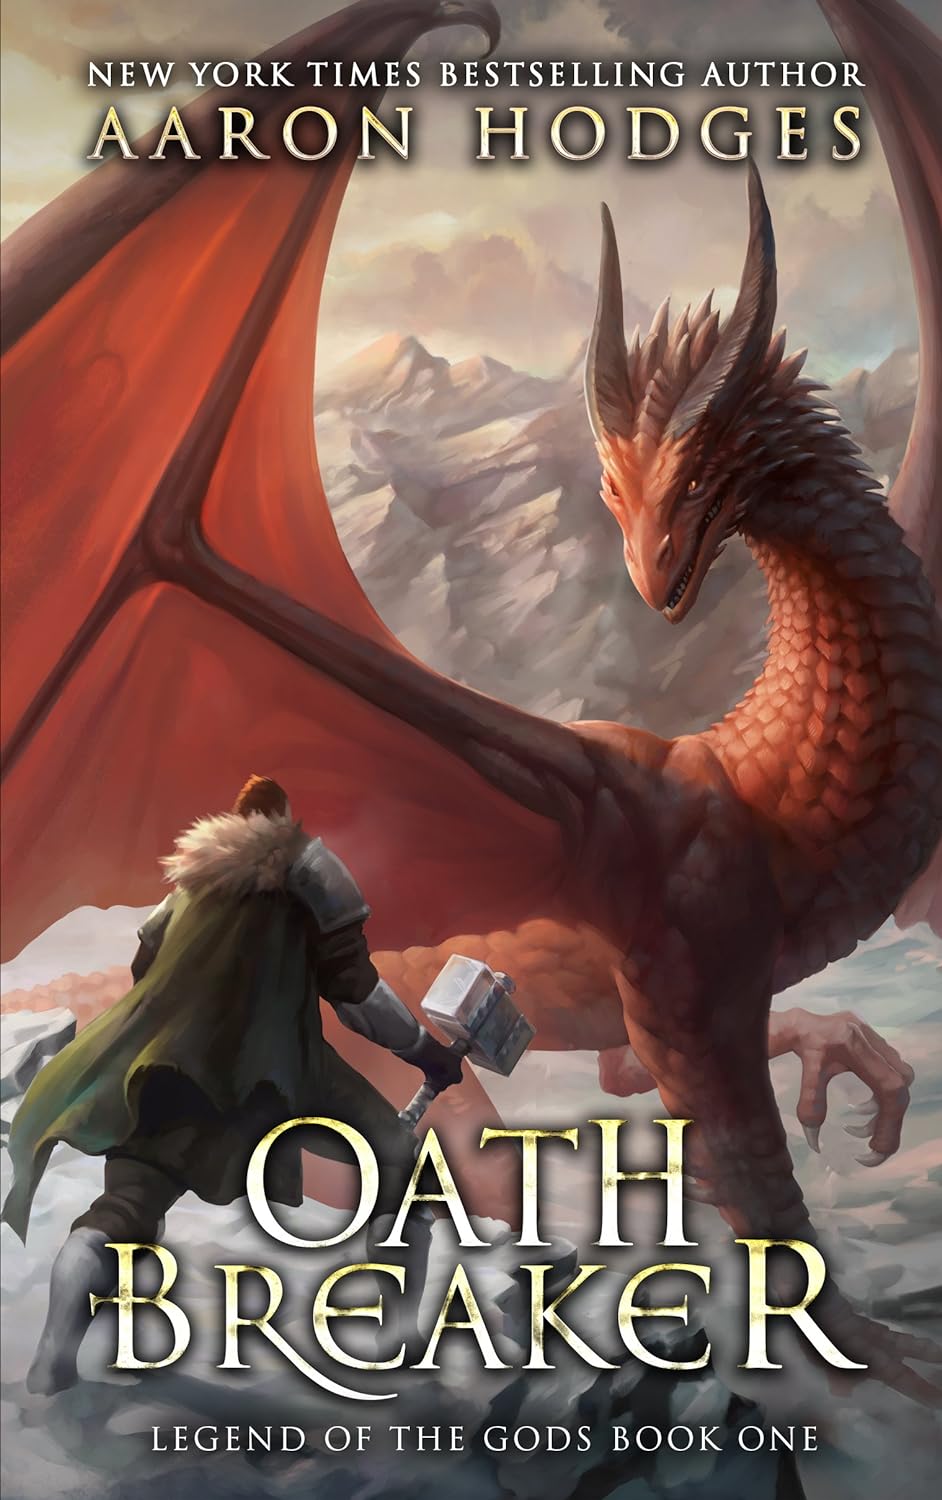 Oathbreaker (The Legend of the Gods Book 1) is free on Amazon Kindle